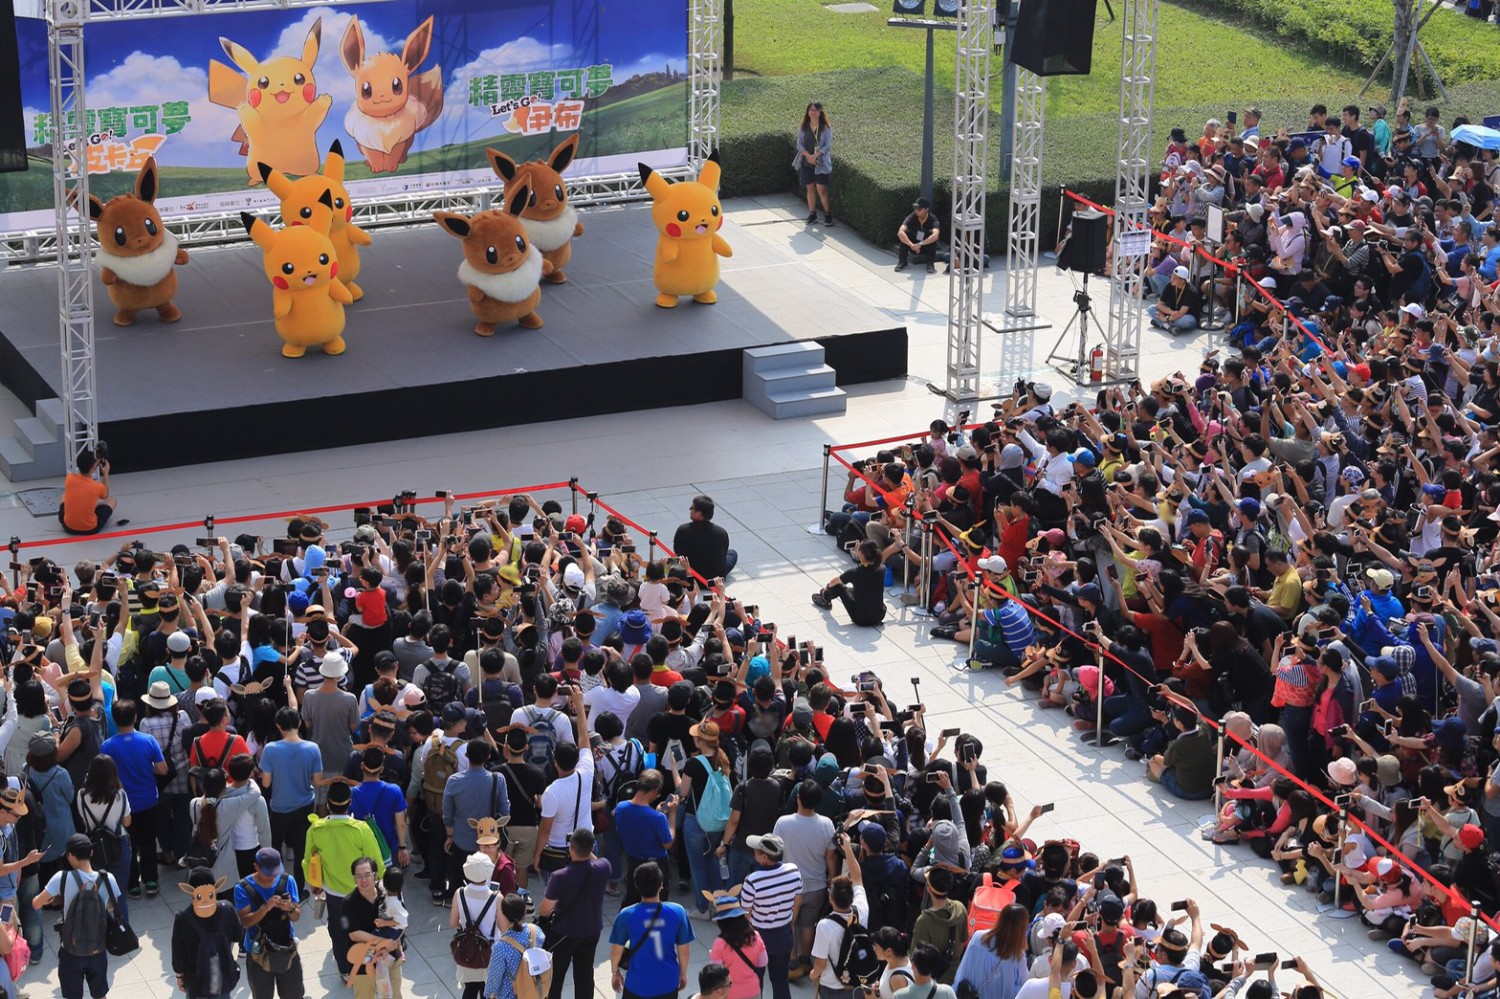 Pokemon Go Singapore Safari Zone 2022 - Pokemon GO Guide - IGN